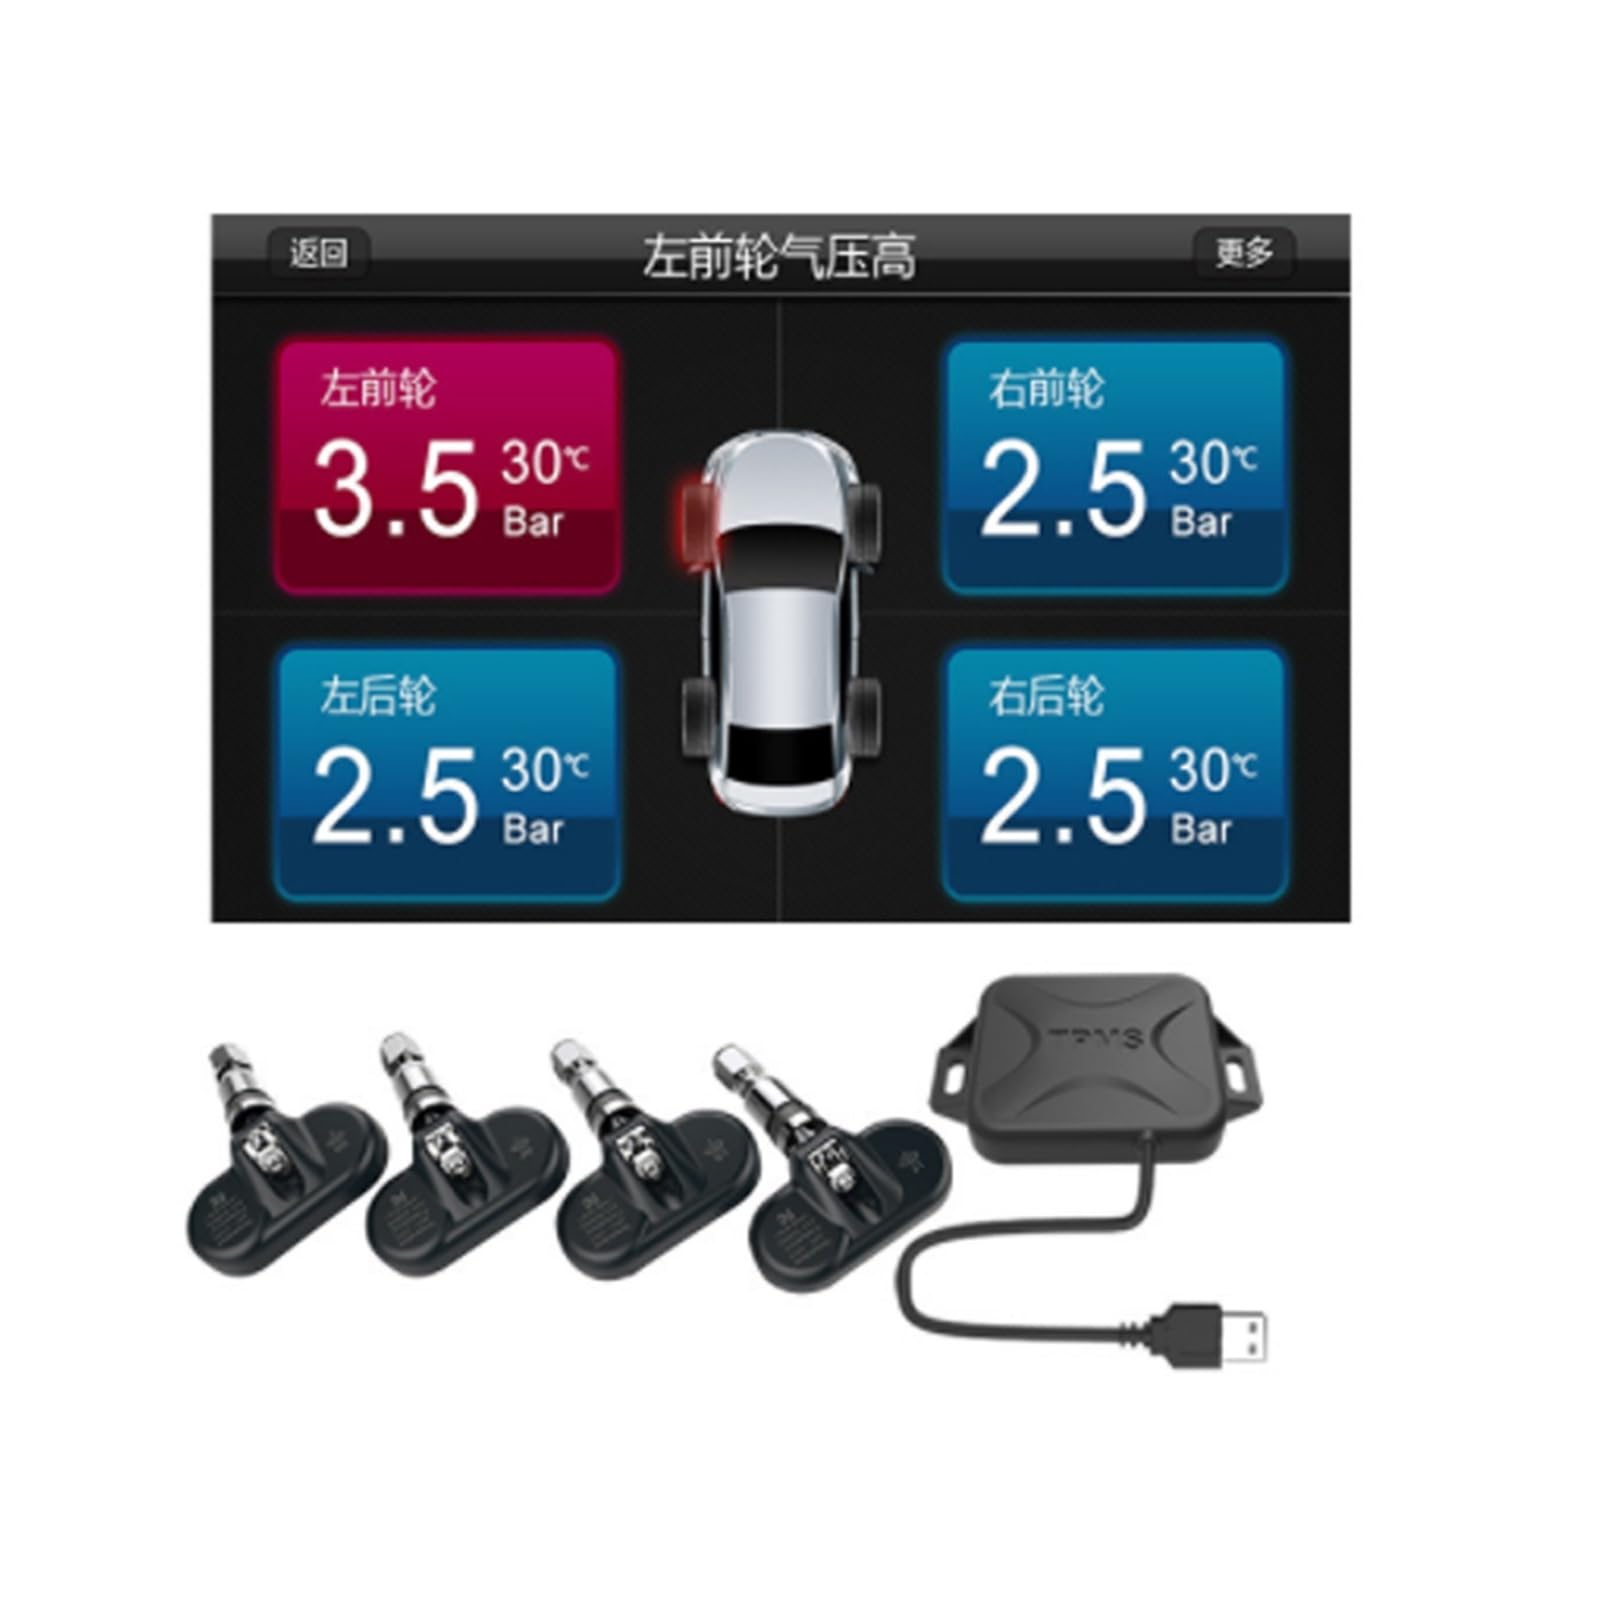 HD Android TPMS for Auto Radio DVD Player USB TMPS Tire Pressure Monitoring System Ersatz Reifen Interne Externe Sensor Auto von CXYLOVELG